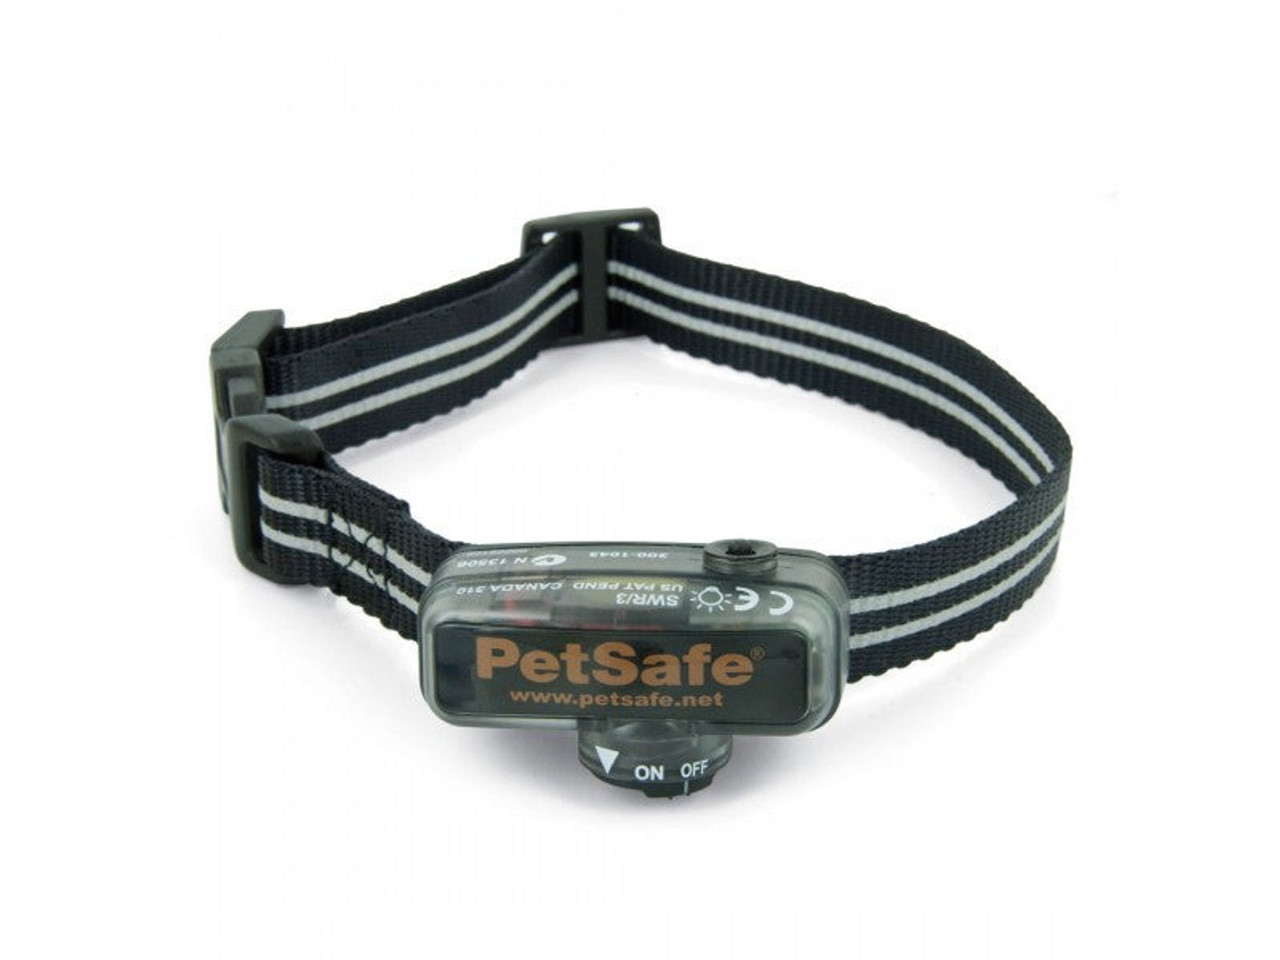 PetSafe Stubborn Dog In-Ground Adjustable Fence - Black